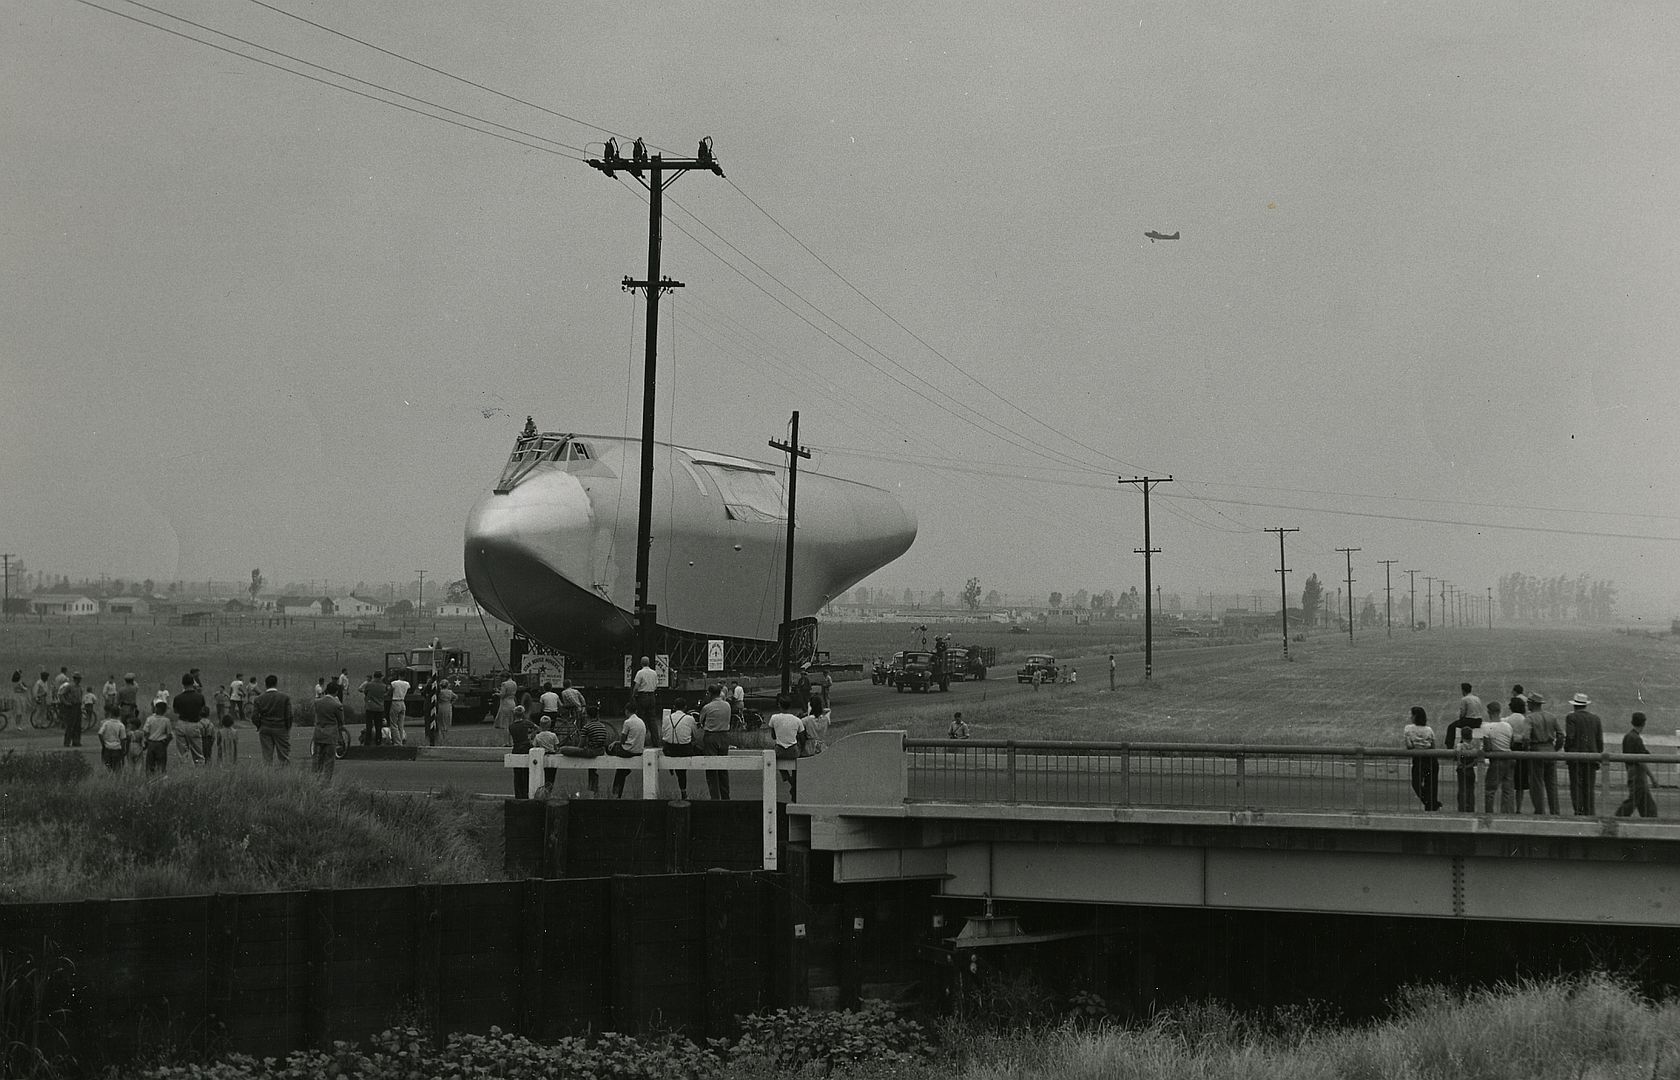 Hughes Flying Boat Fuselage In Transport California June 15 1945